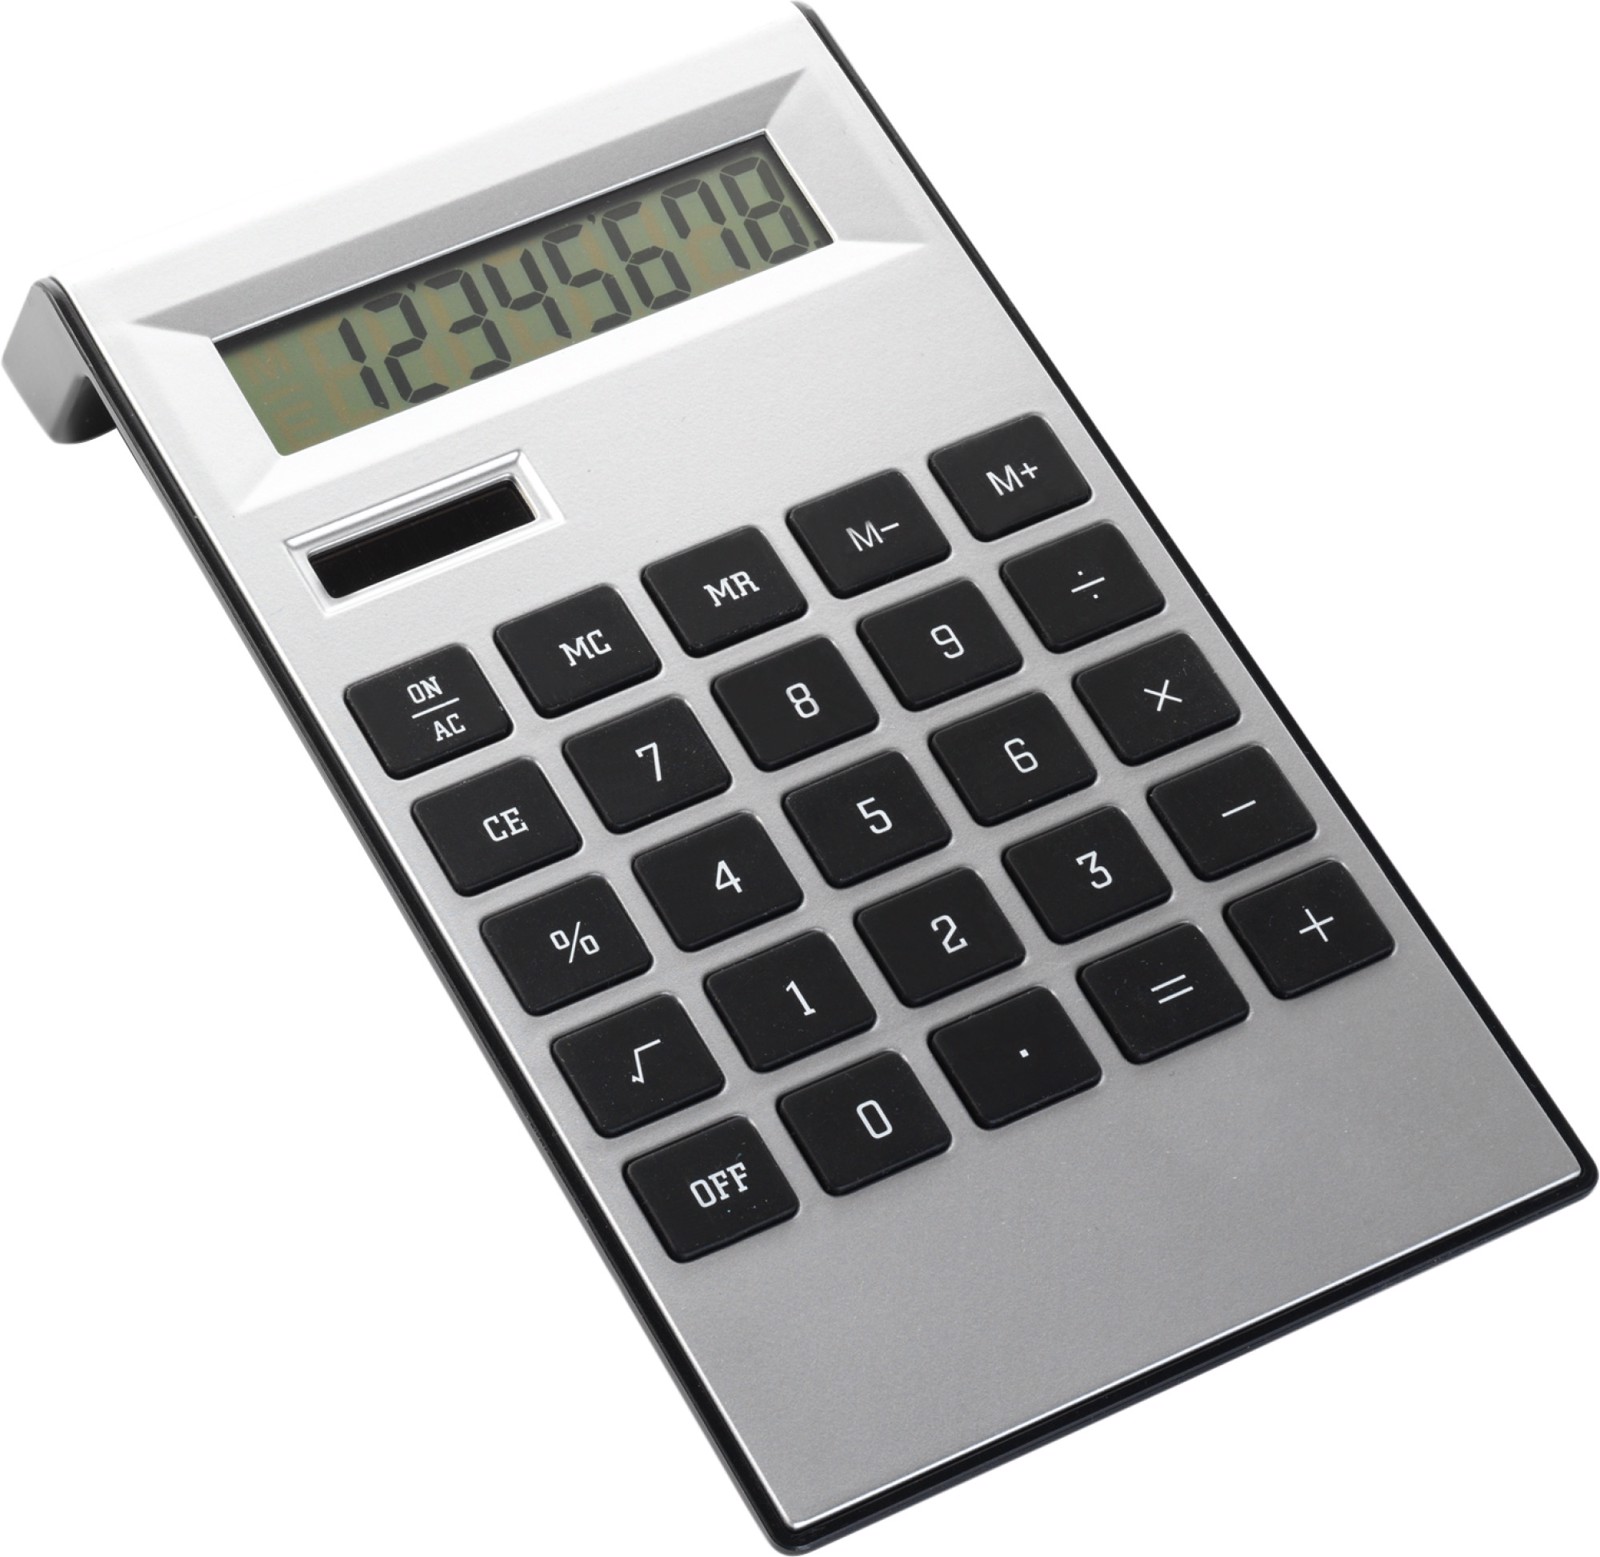 ABS calculator - Black / Silver